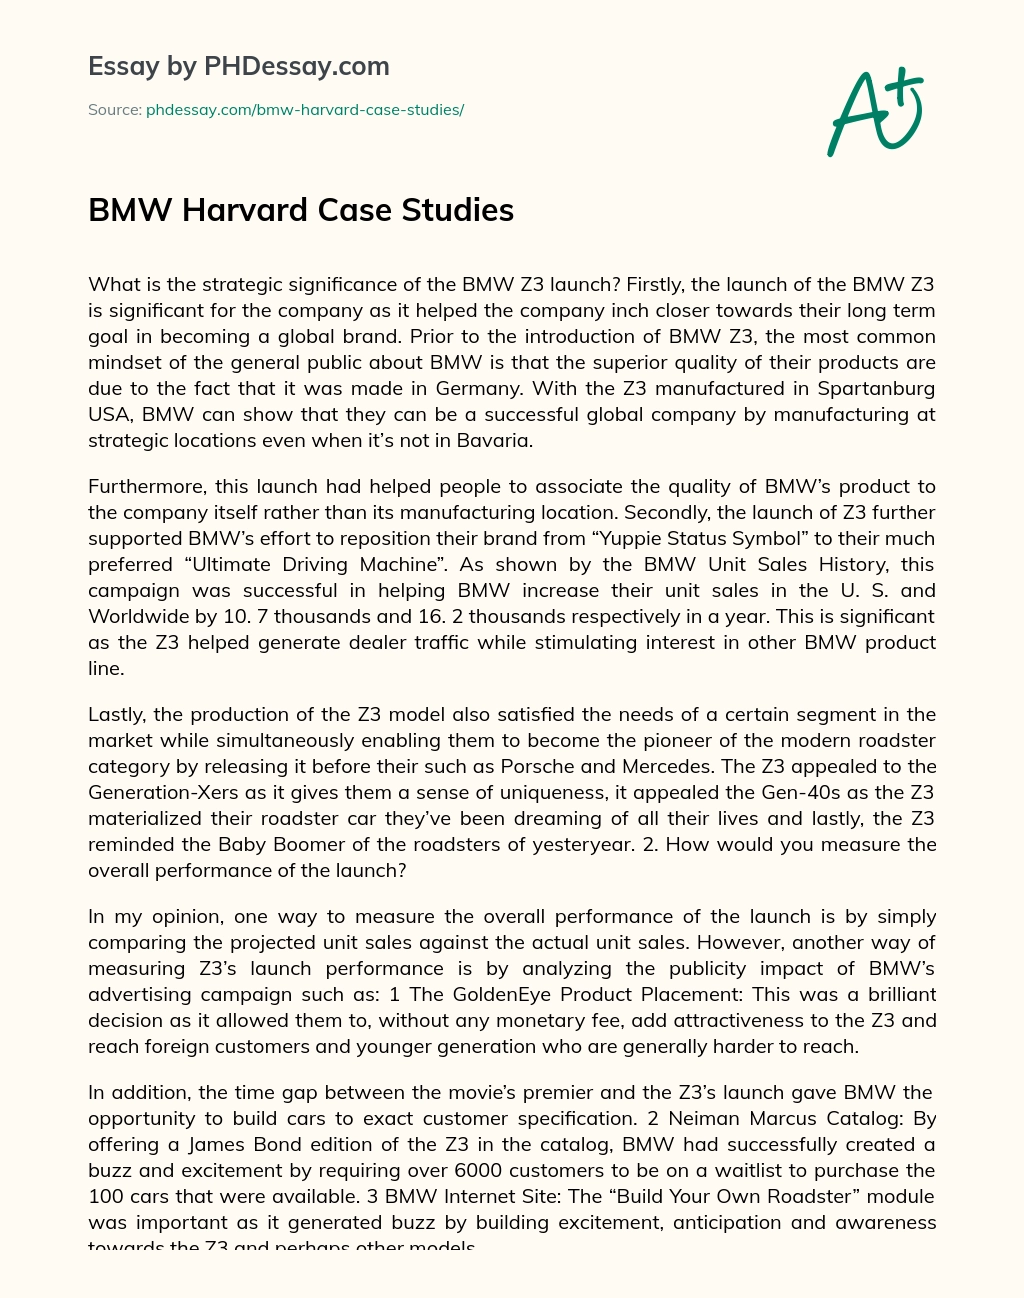 BMW Harvard Case Studies essay